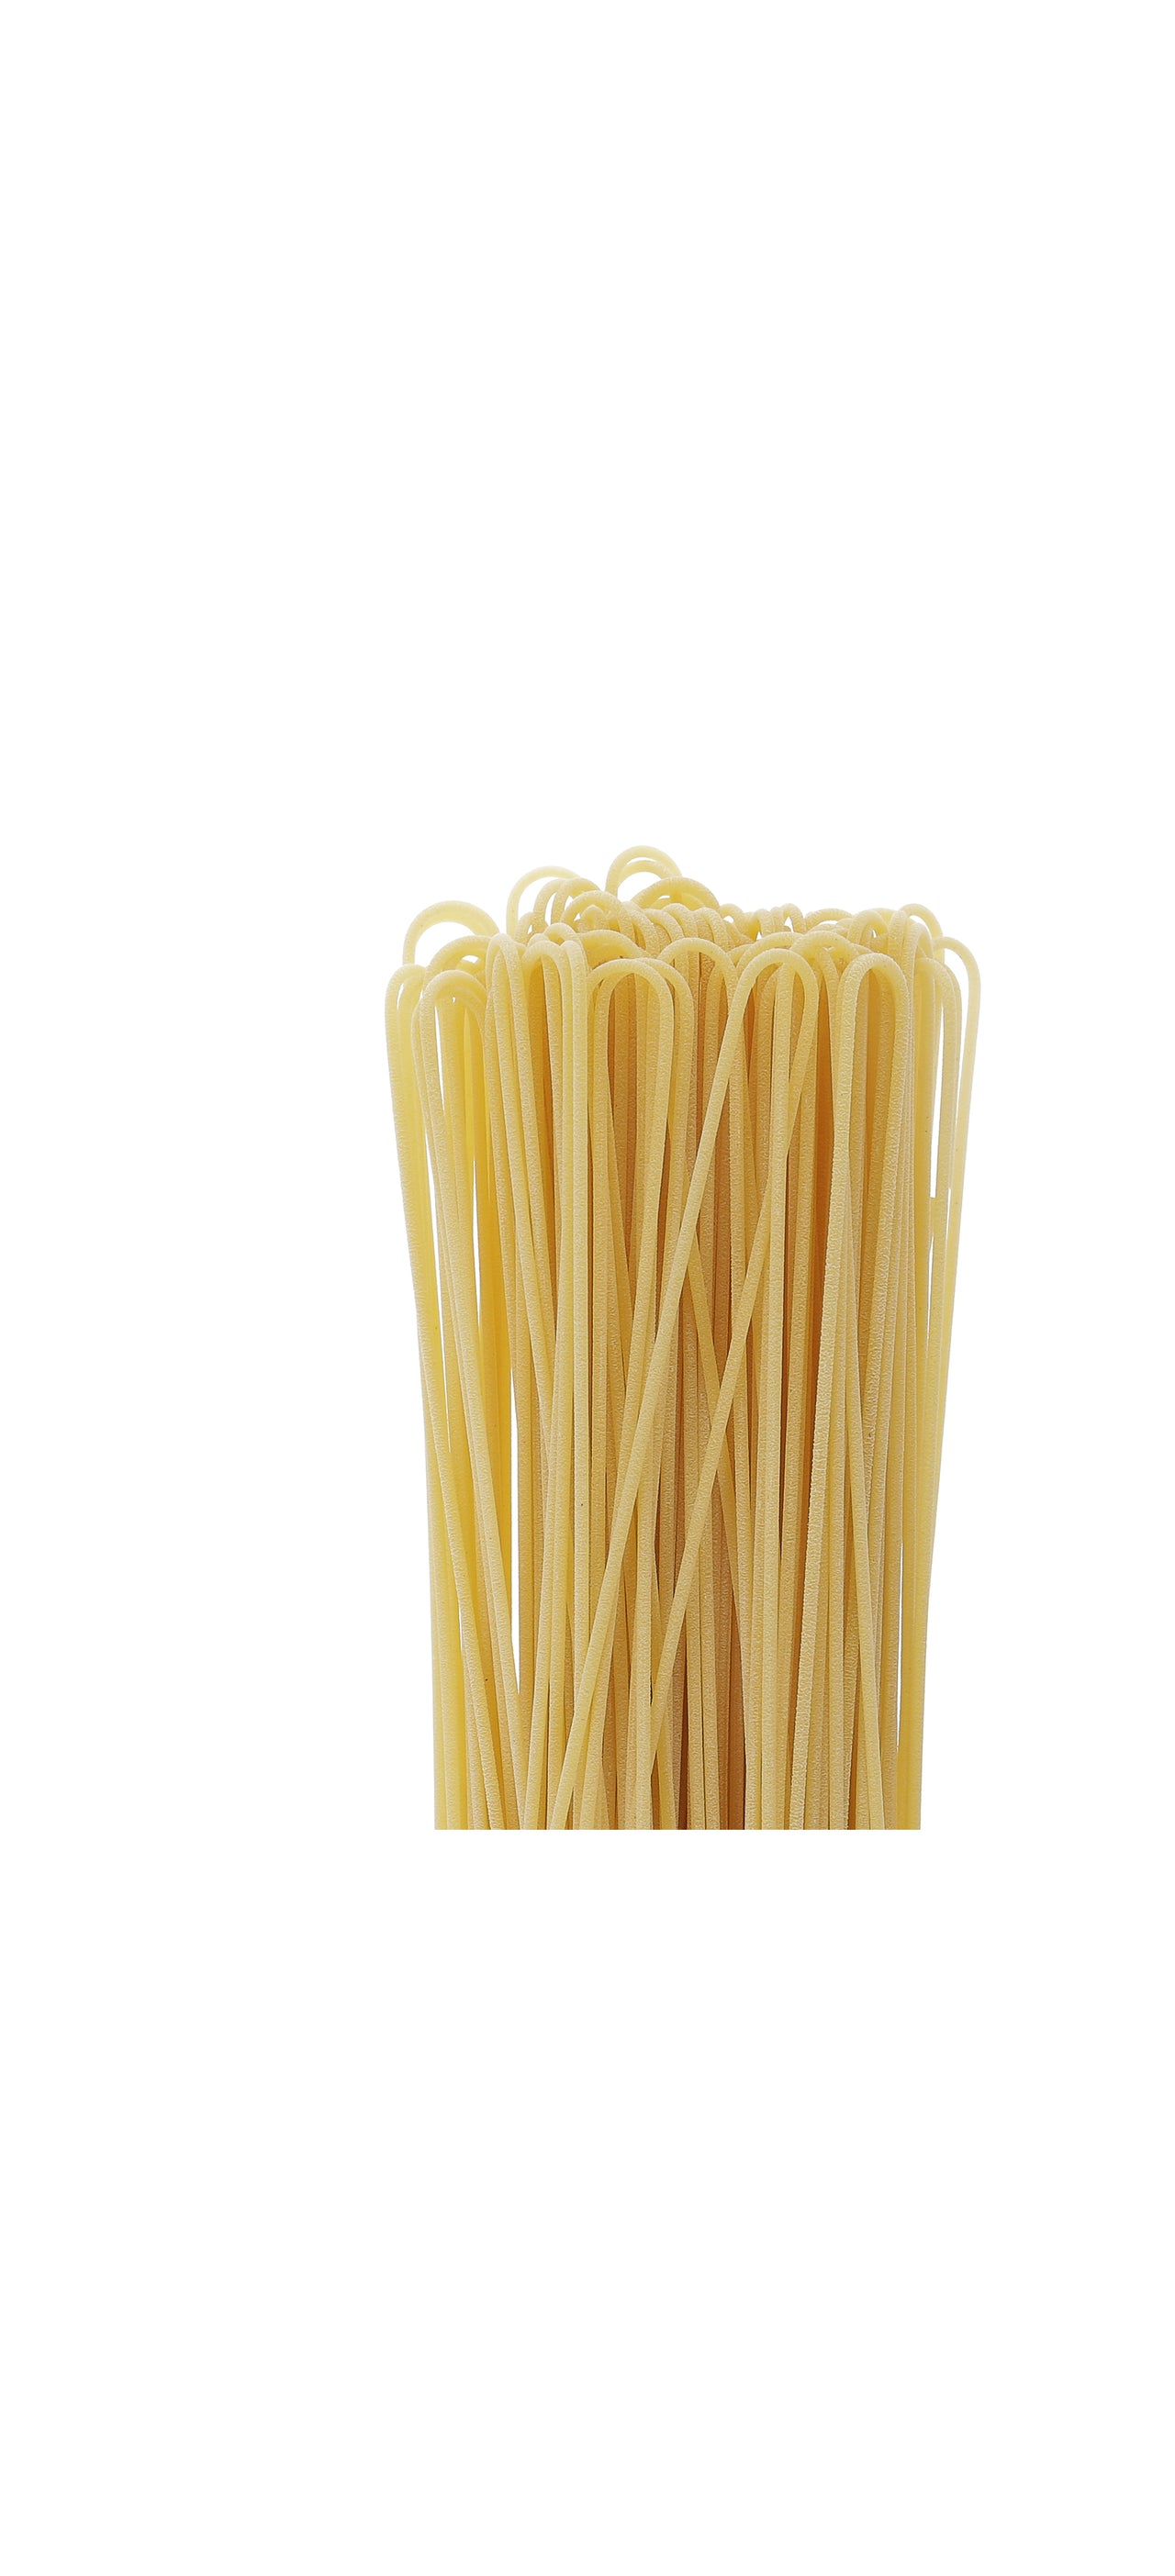 Spaghettoni 500g